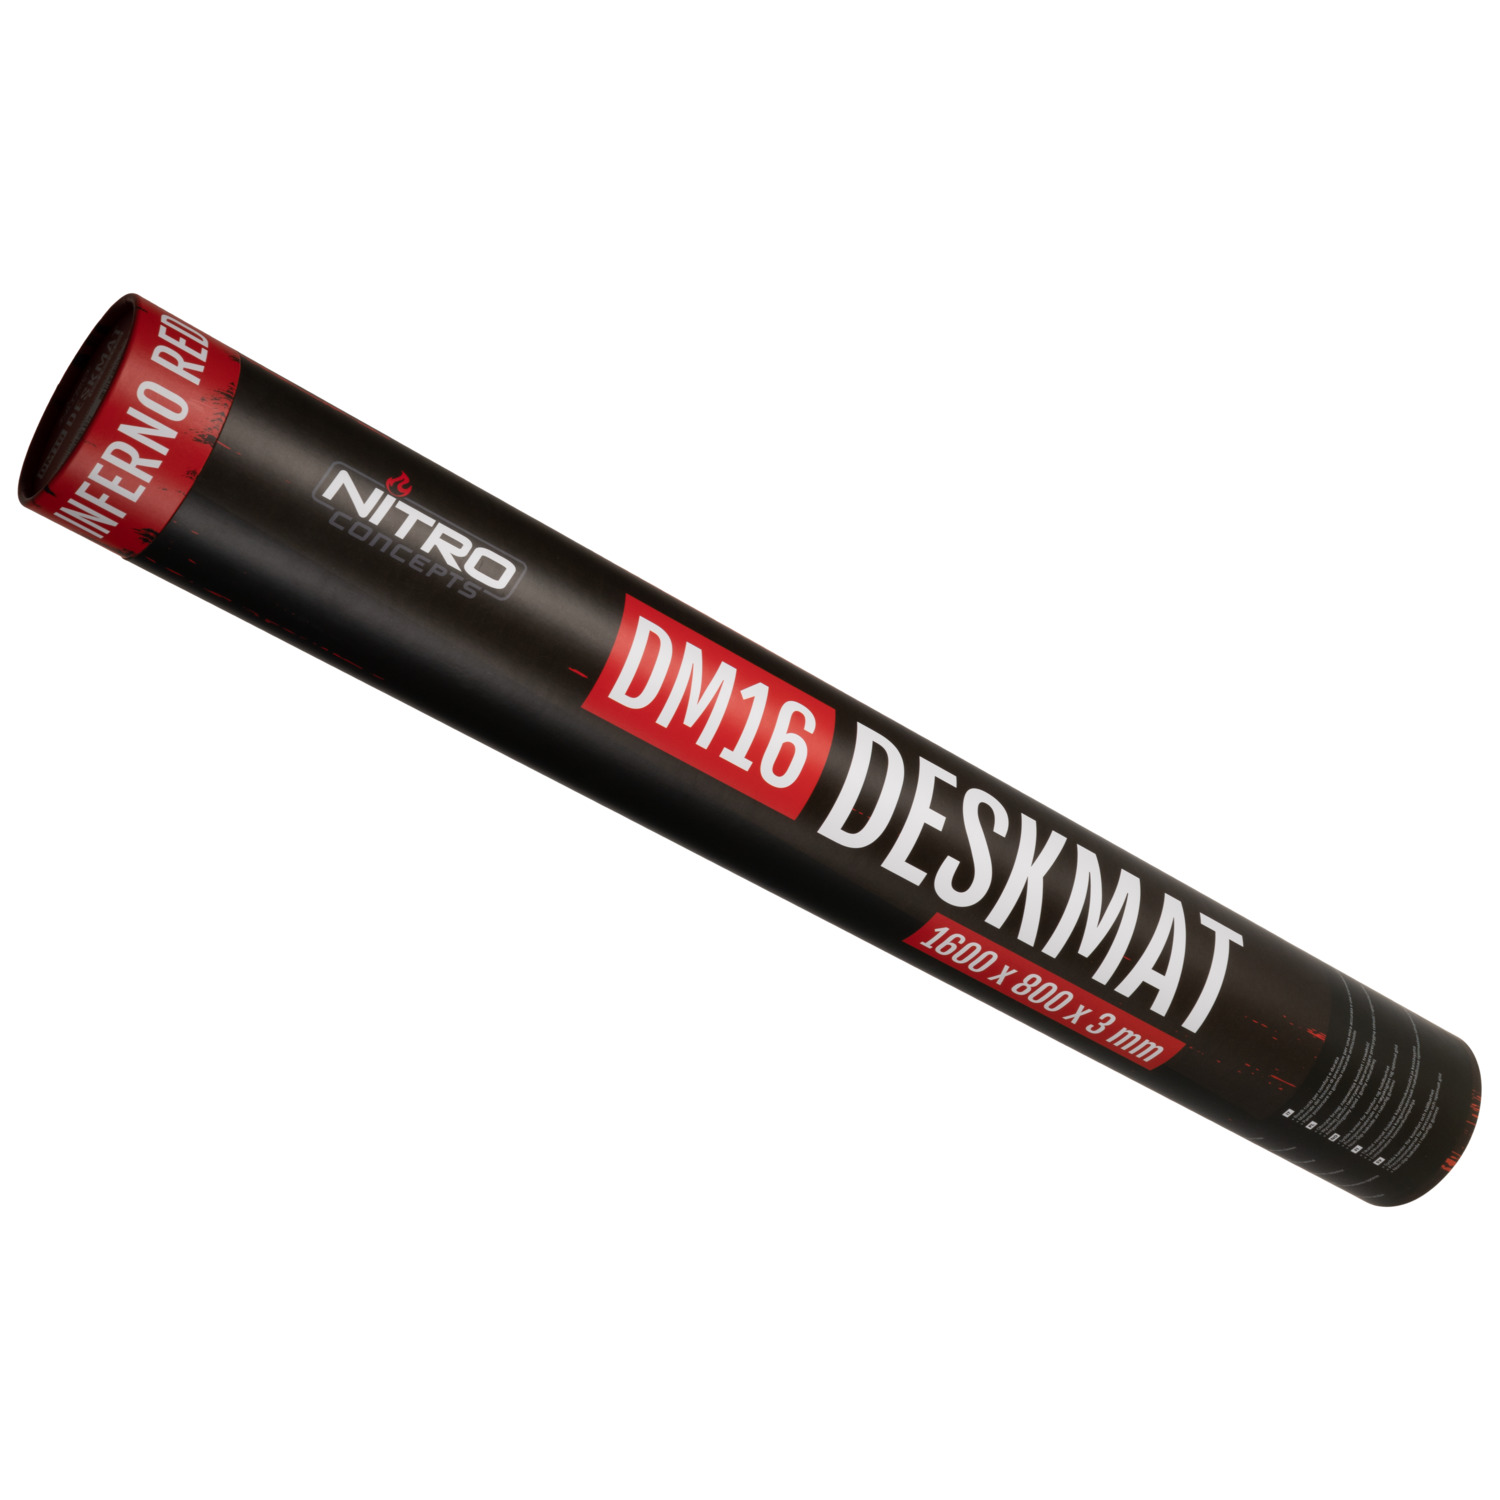 Deskmat DM16 - 1600x800mm - INFERNO RED